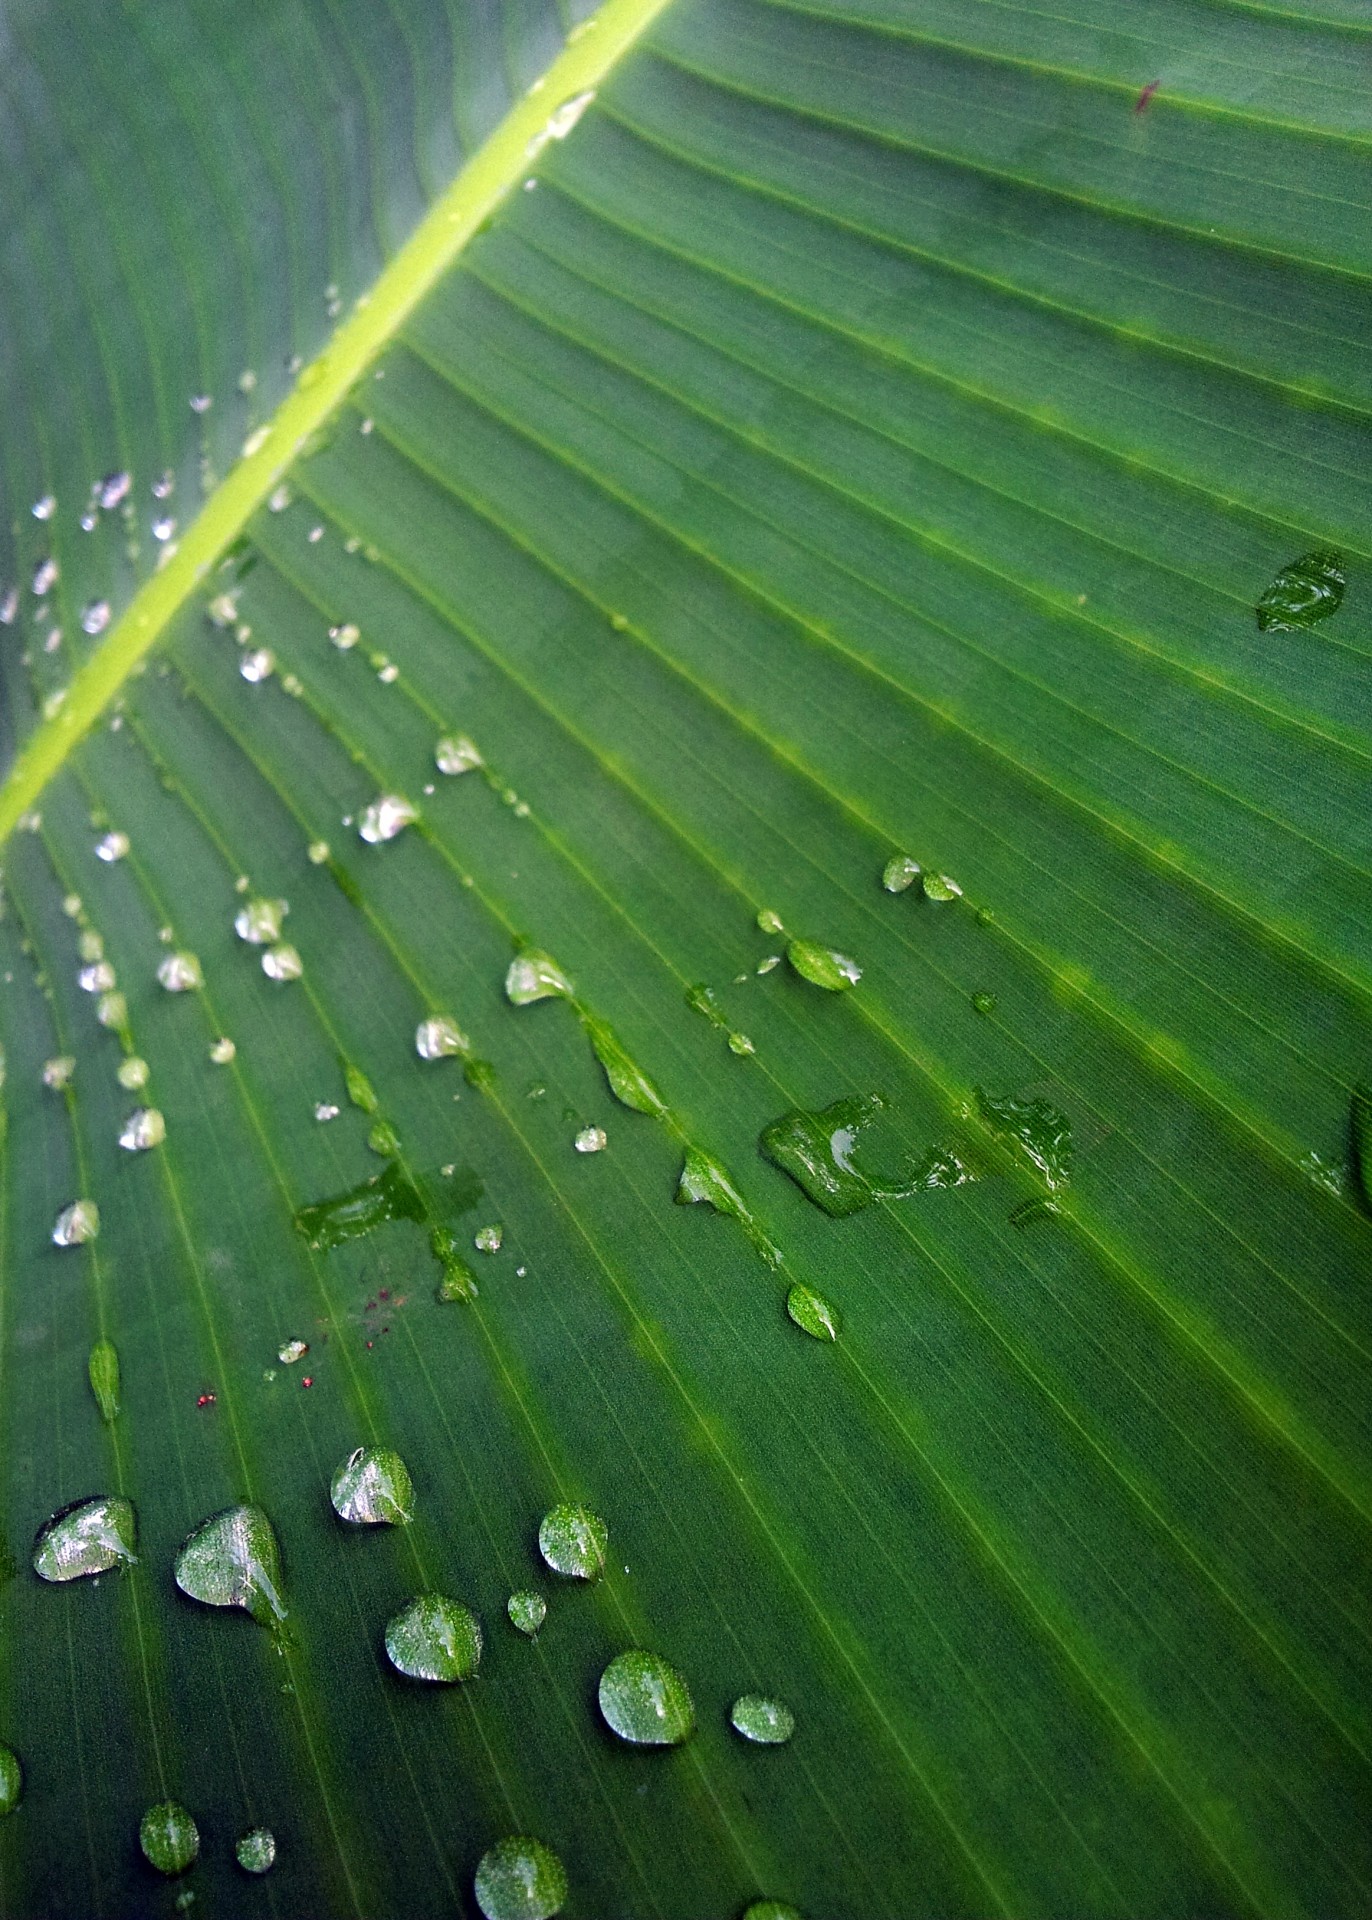 banana leaf surface after rain texture wallpaper free photo